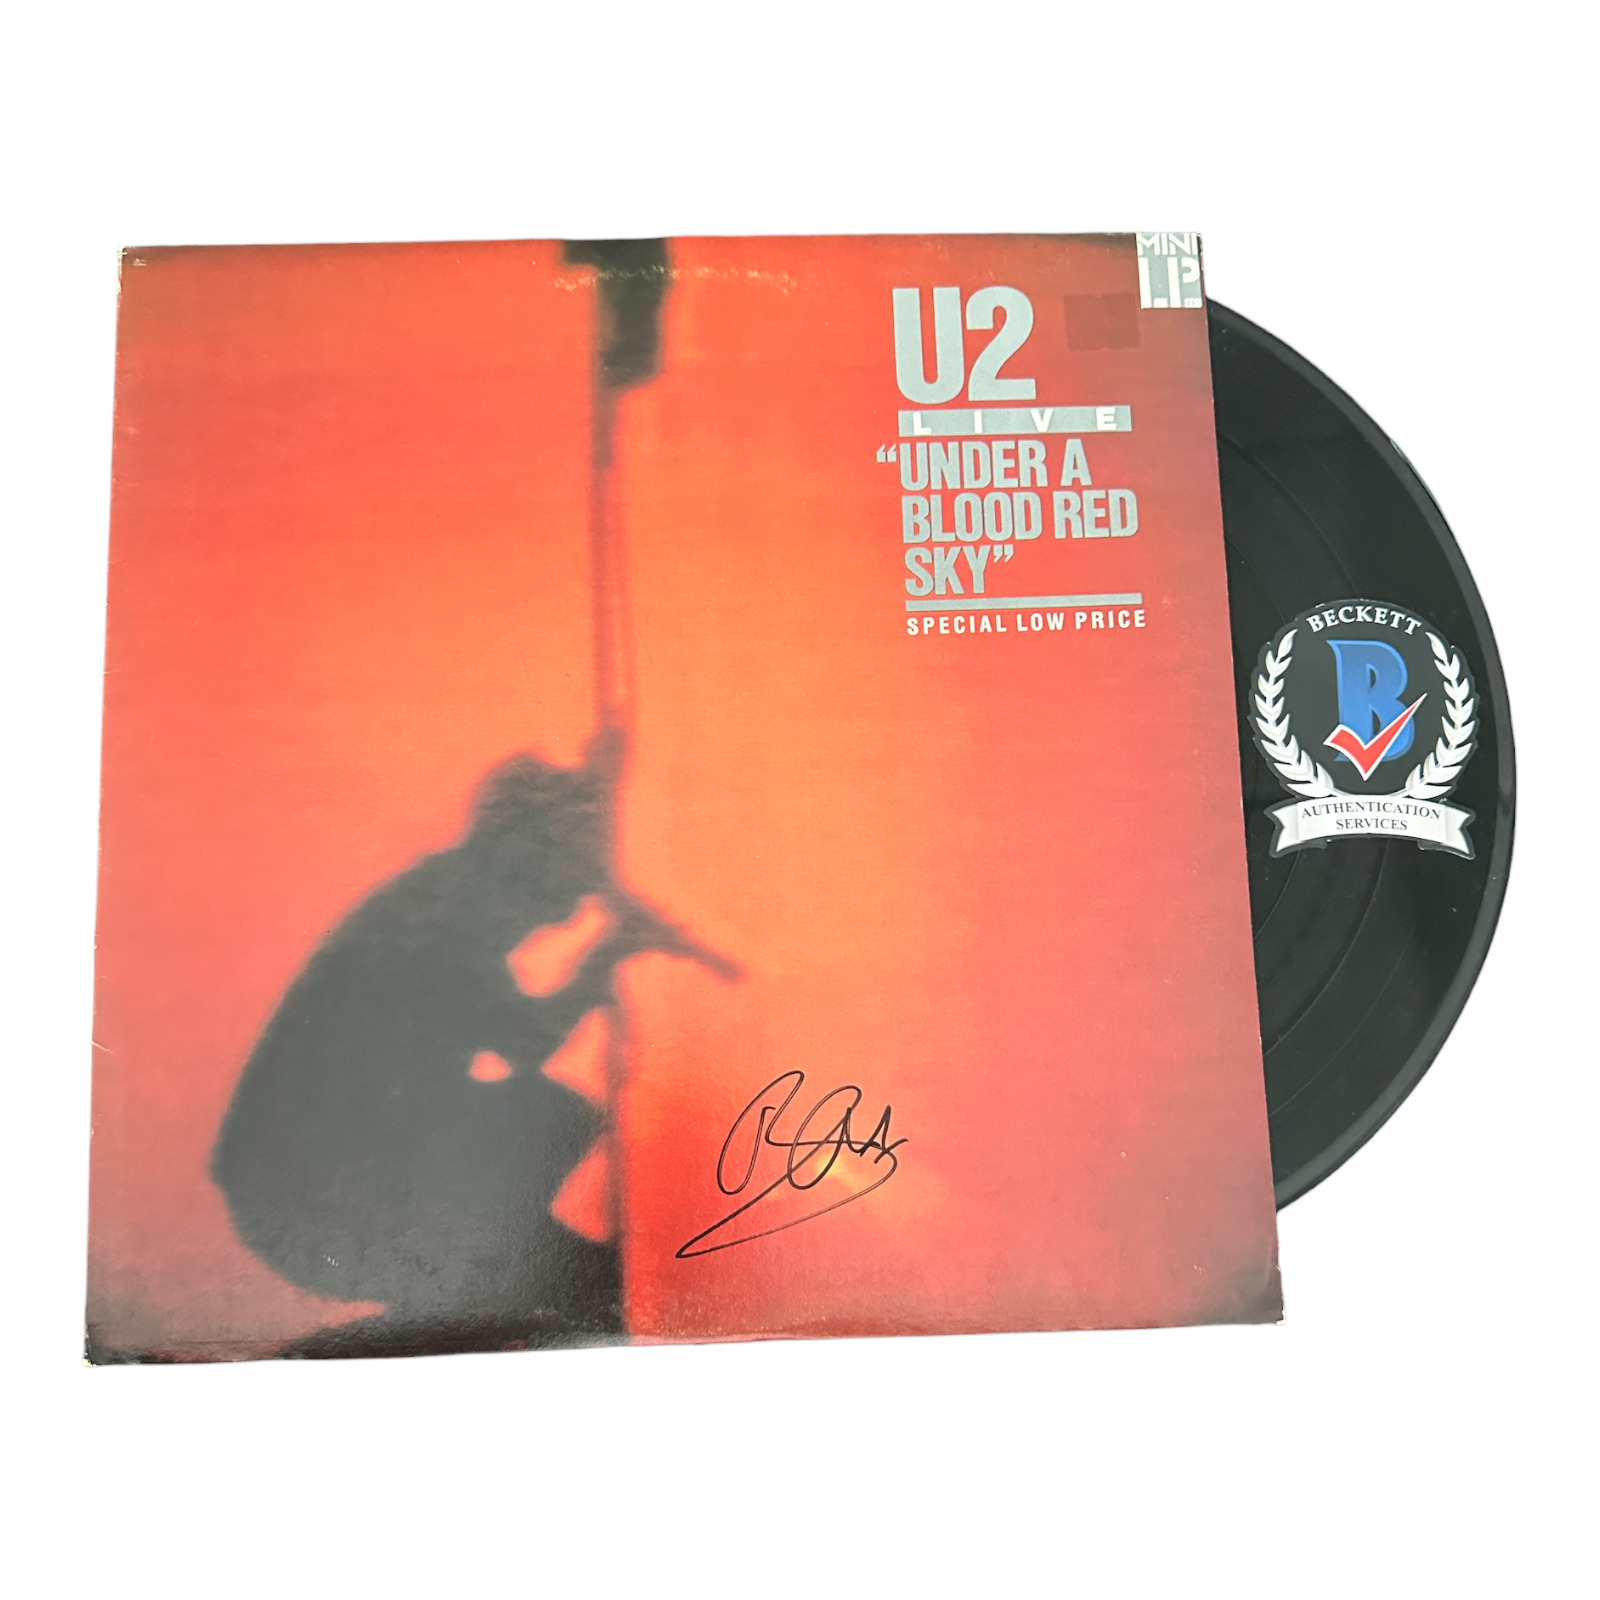 BONO SIGNED AUTOGRAPH U2 'UNDER A BLOOD RED SKY' LP VINYL BAS BECKETT